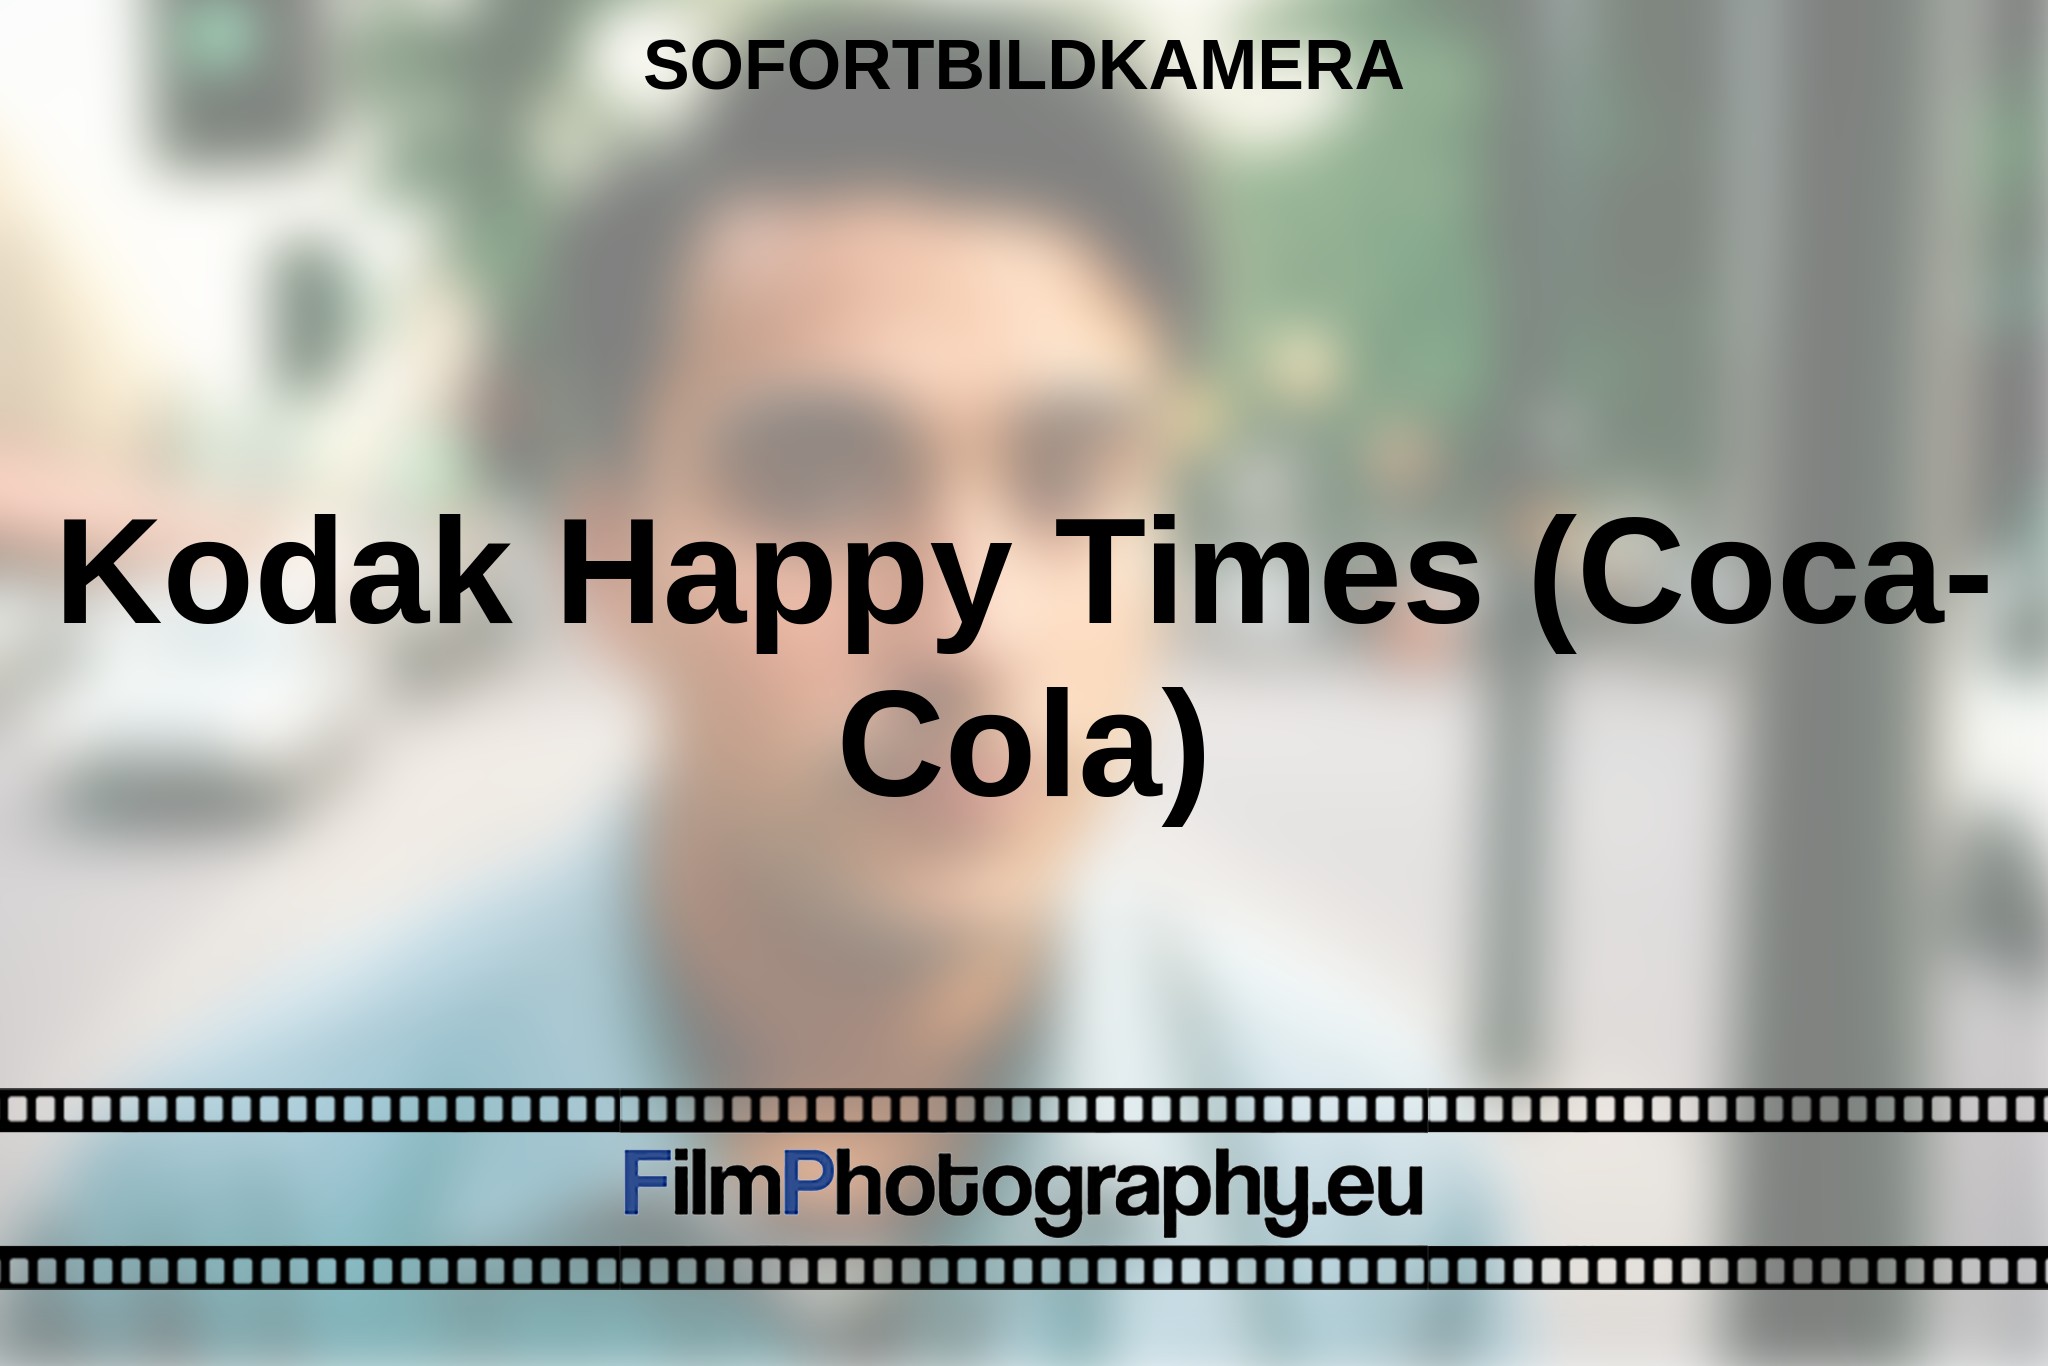 kodak-happy-times-coca-cola--sofortbildkamera-bnv.jpg